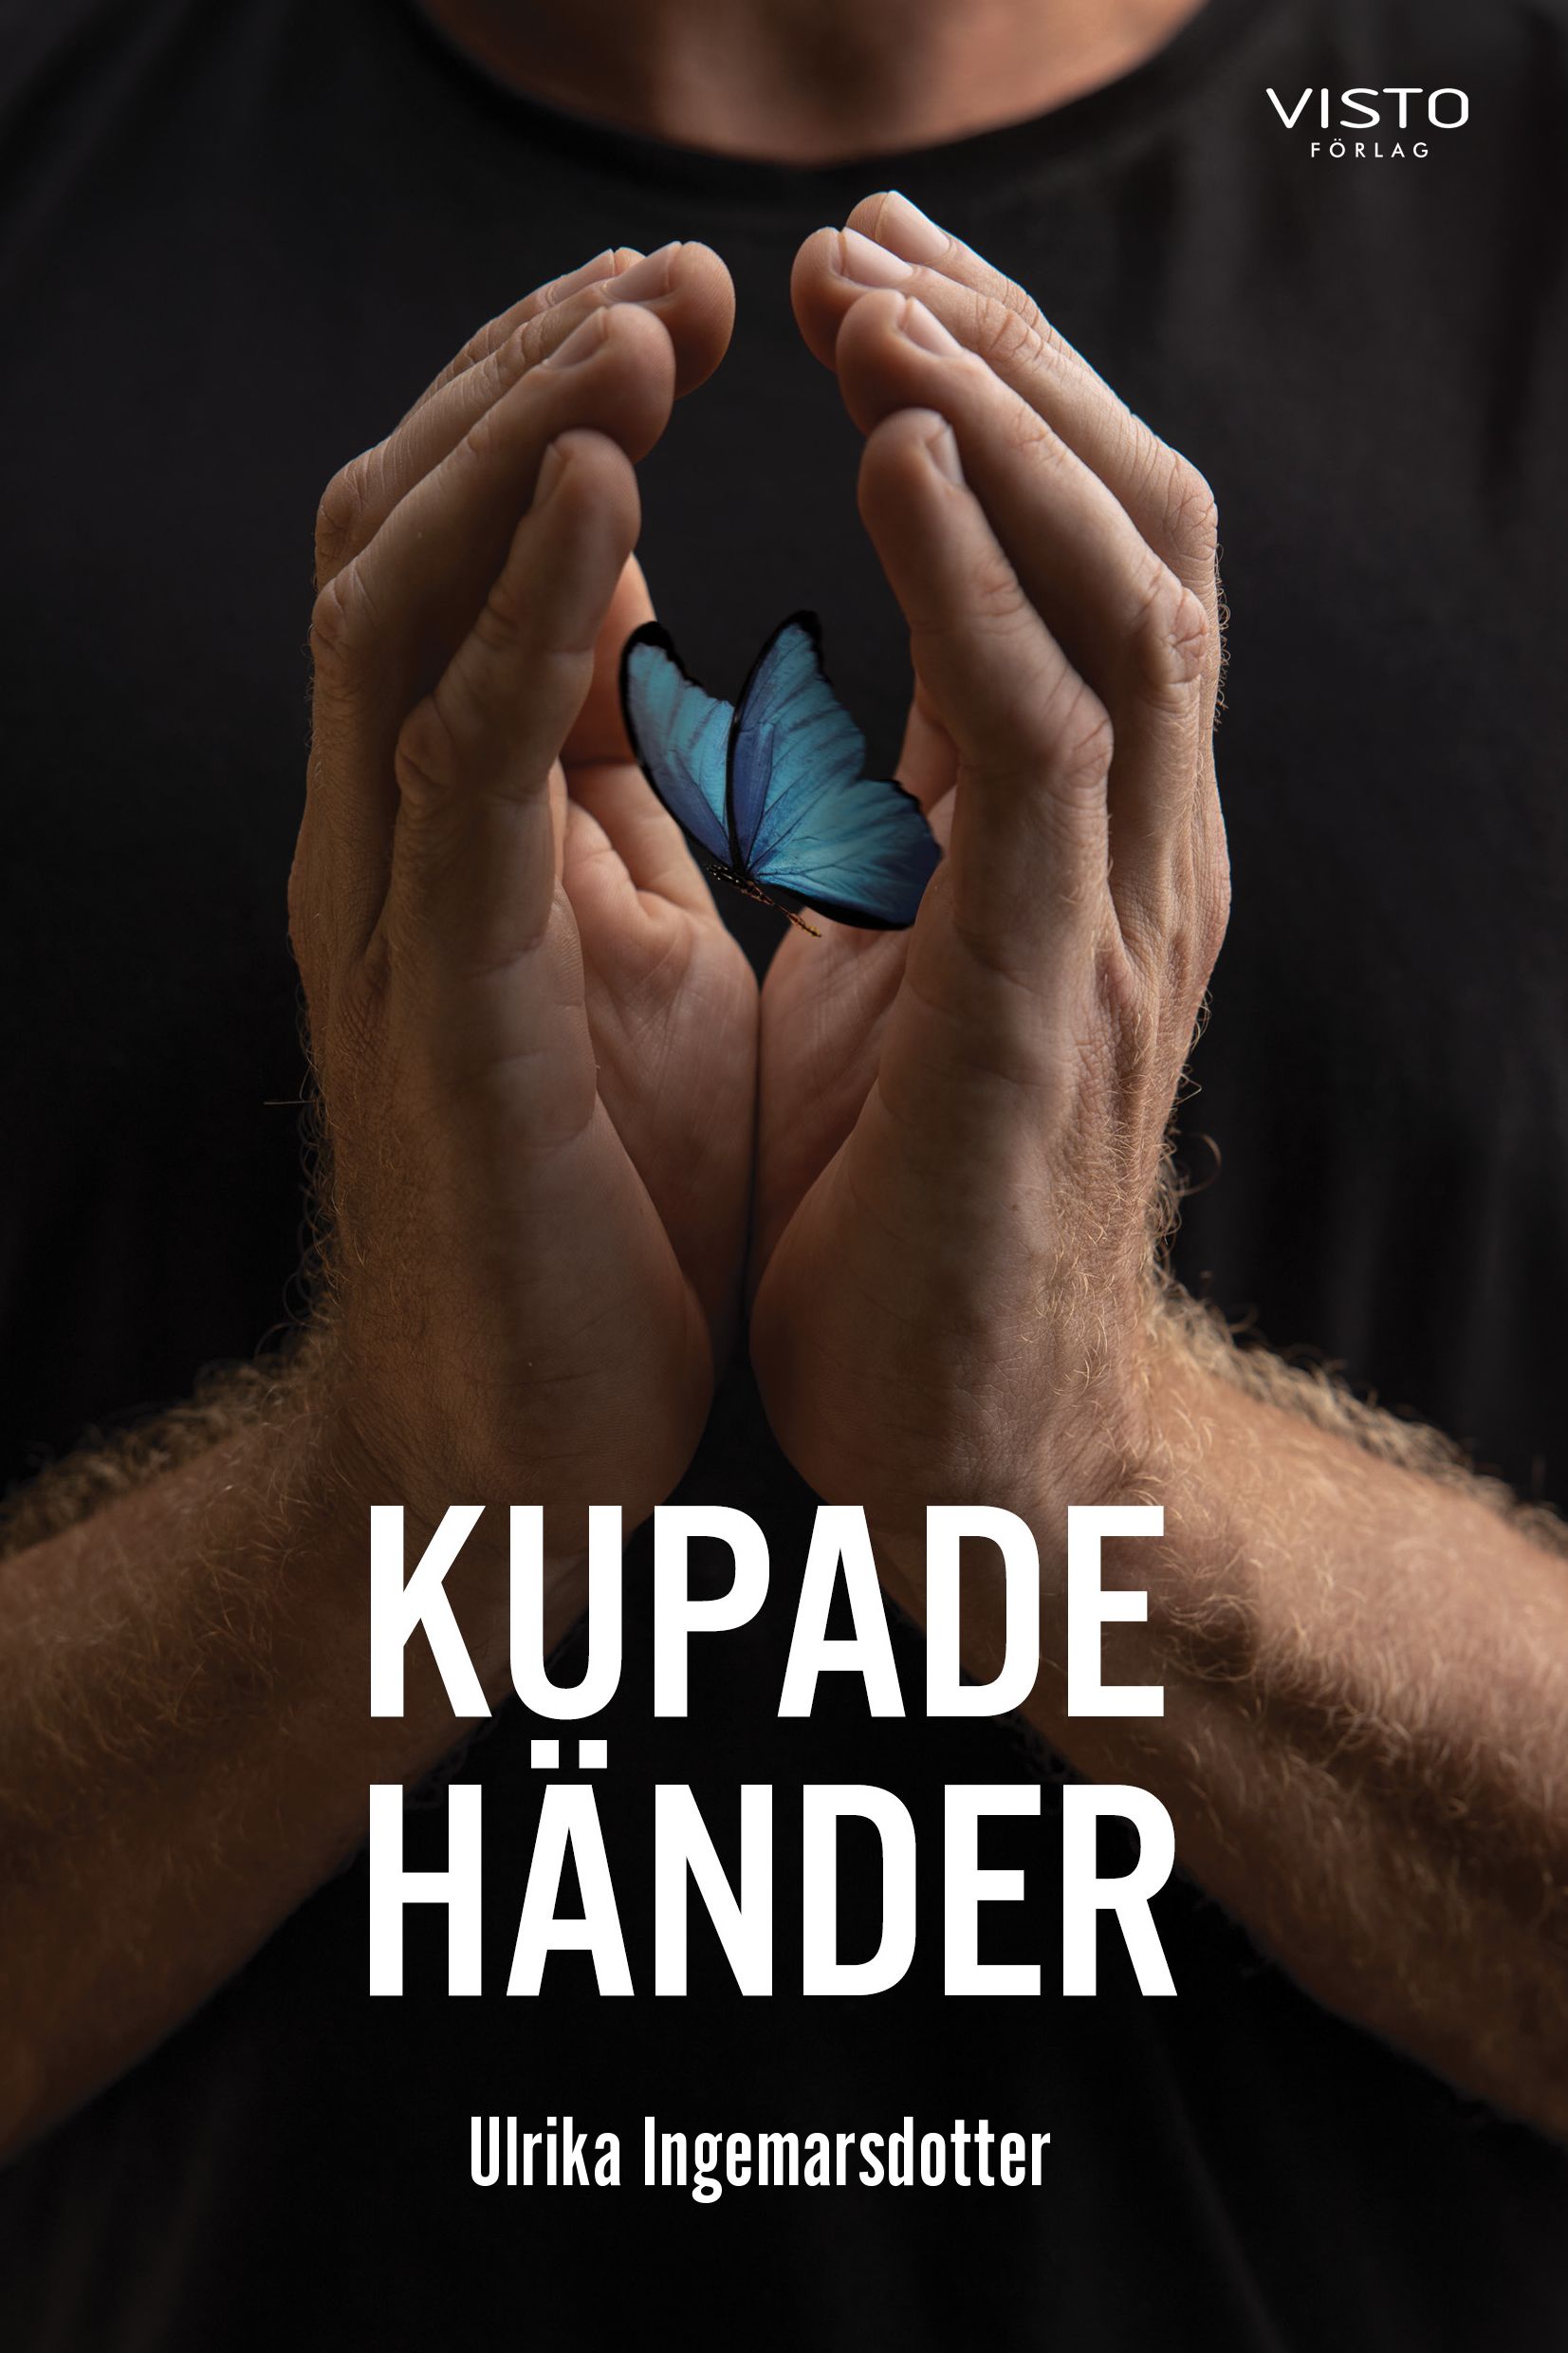 Kupade händer, eBook by Ulrika Ingemarsdotter